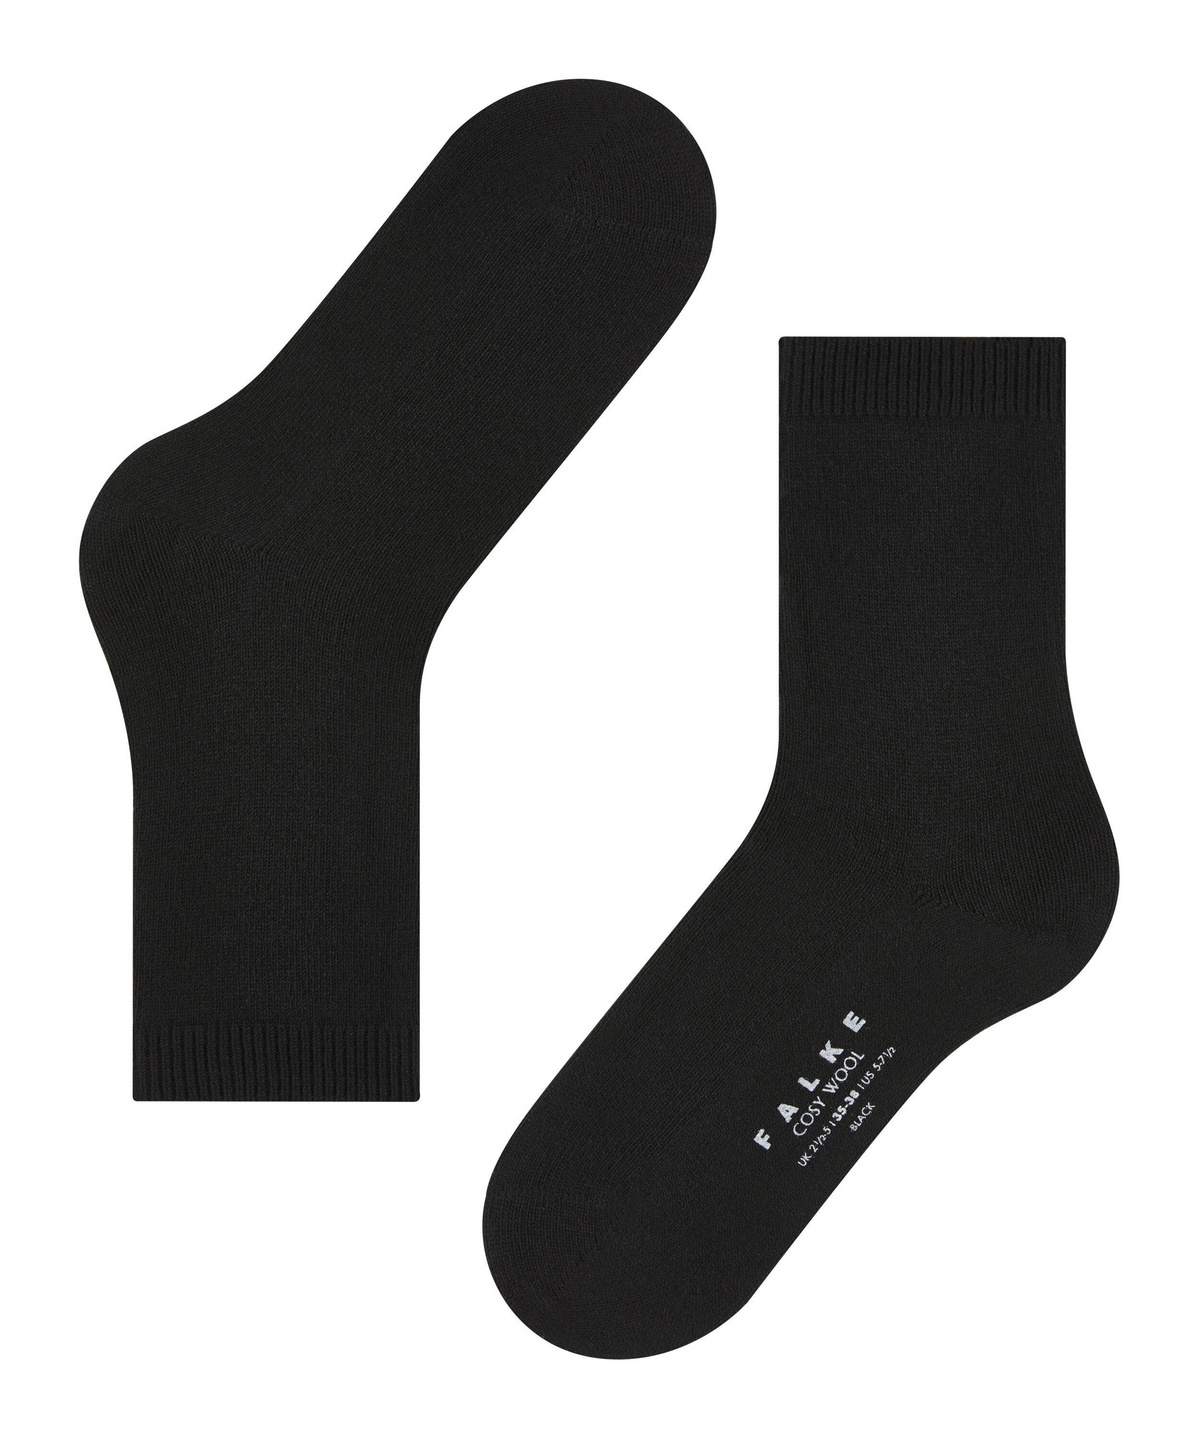 6/8/2019 FALKE Womens Cosy Wool Calf Socks, Crystal Blue 6406 size: 39-42